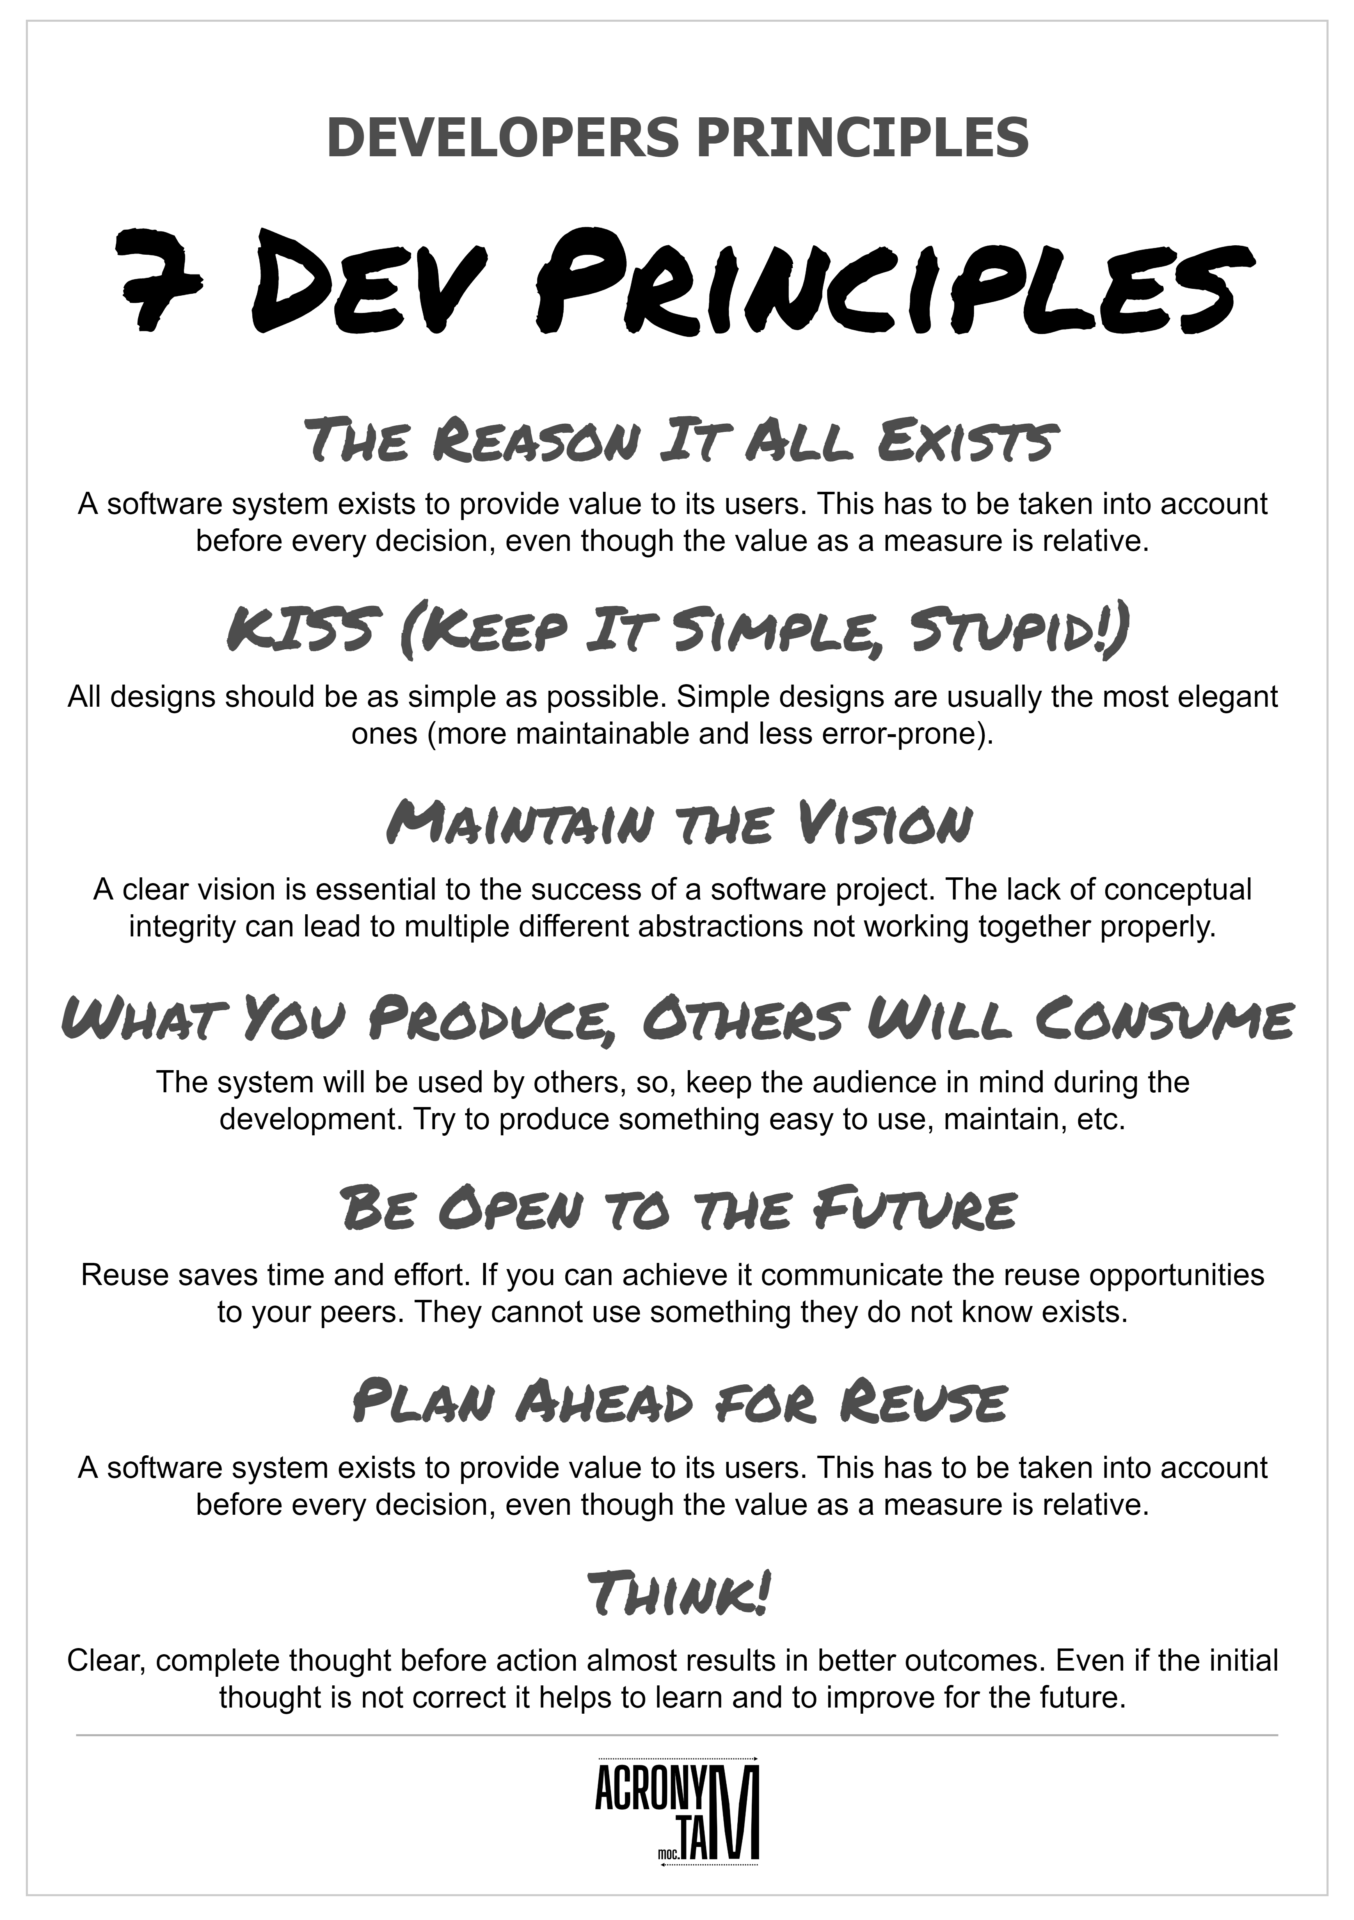 Seven Principles for Software Development